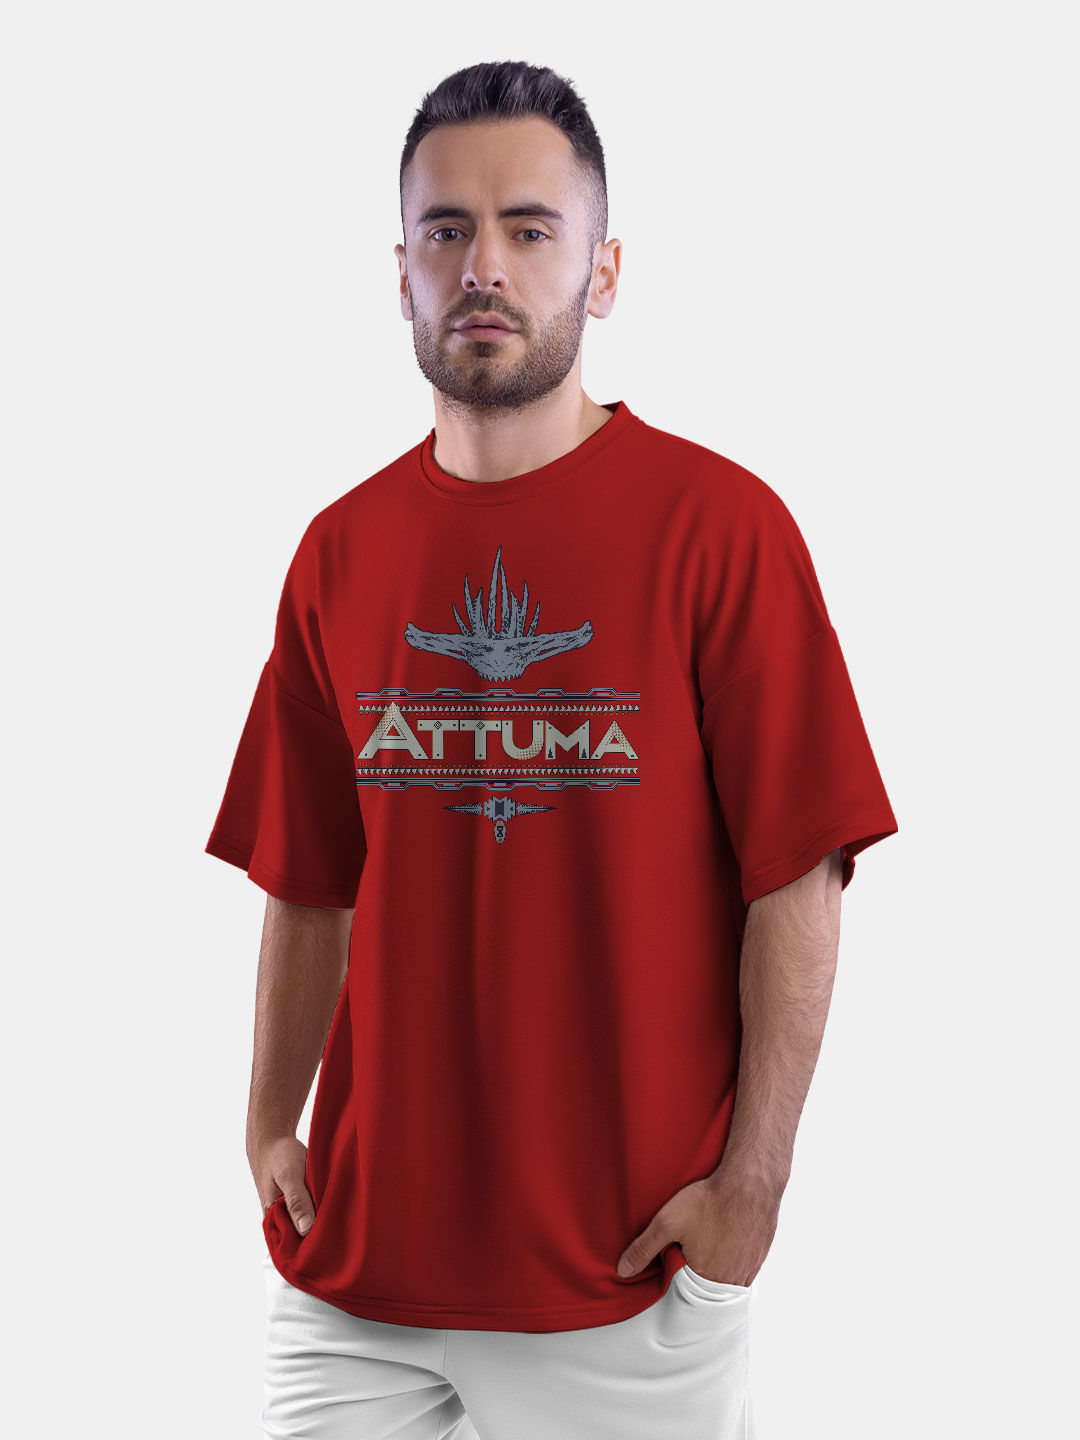 Buy Wakanda Forever Attuma Blood Red - Male Oversized T-Shirt T-Shirts Online